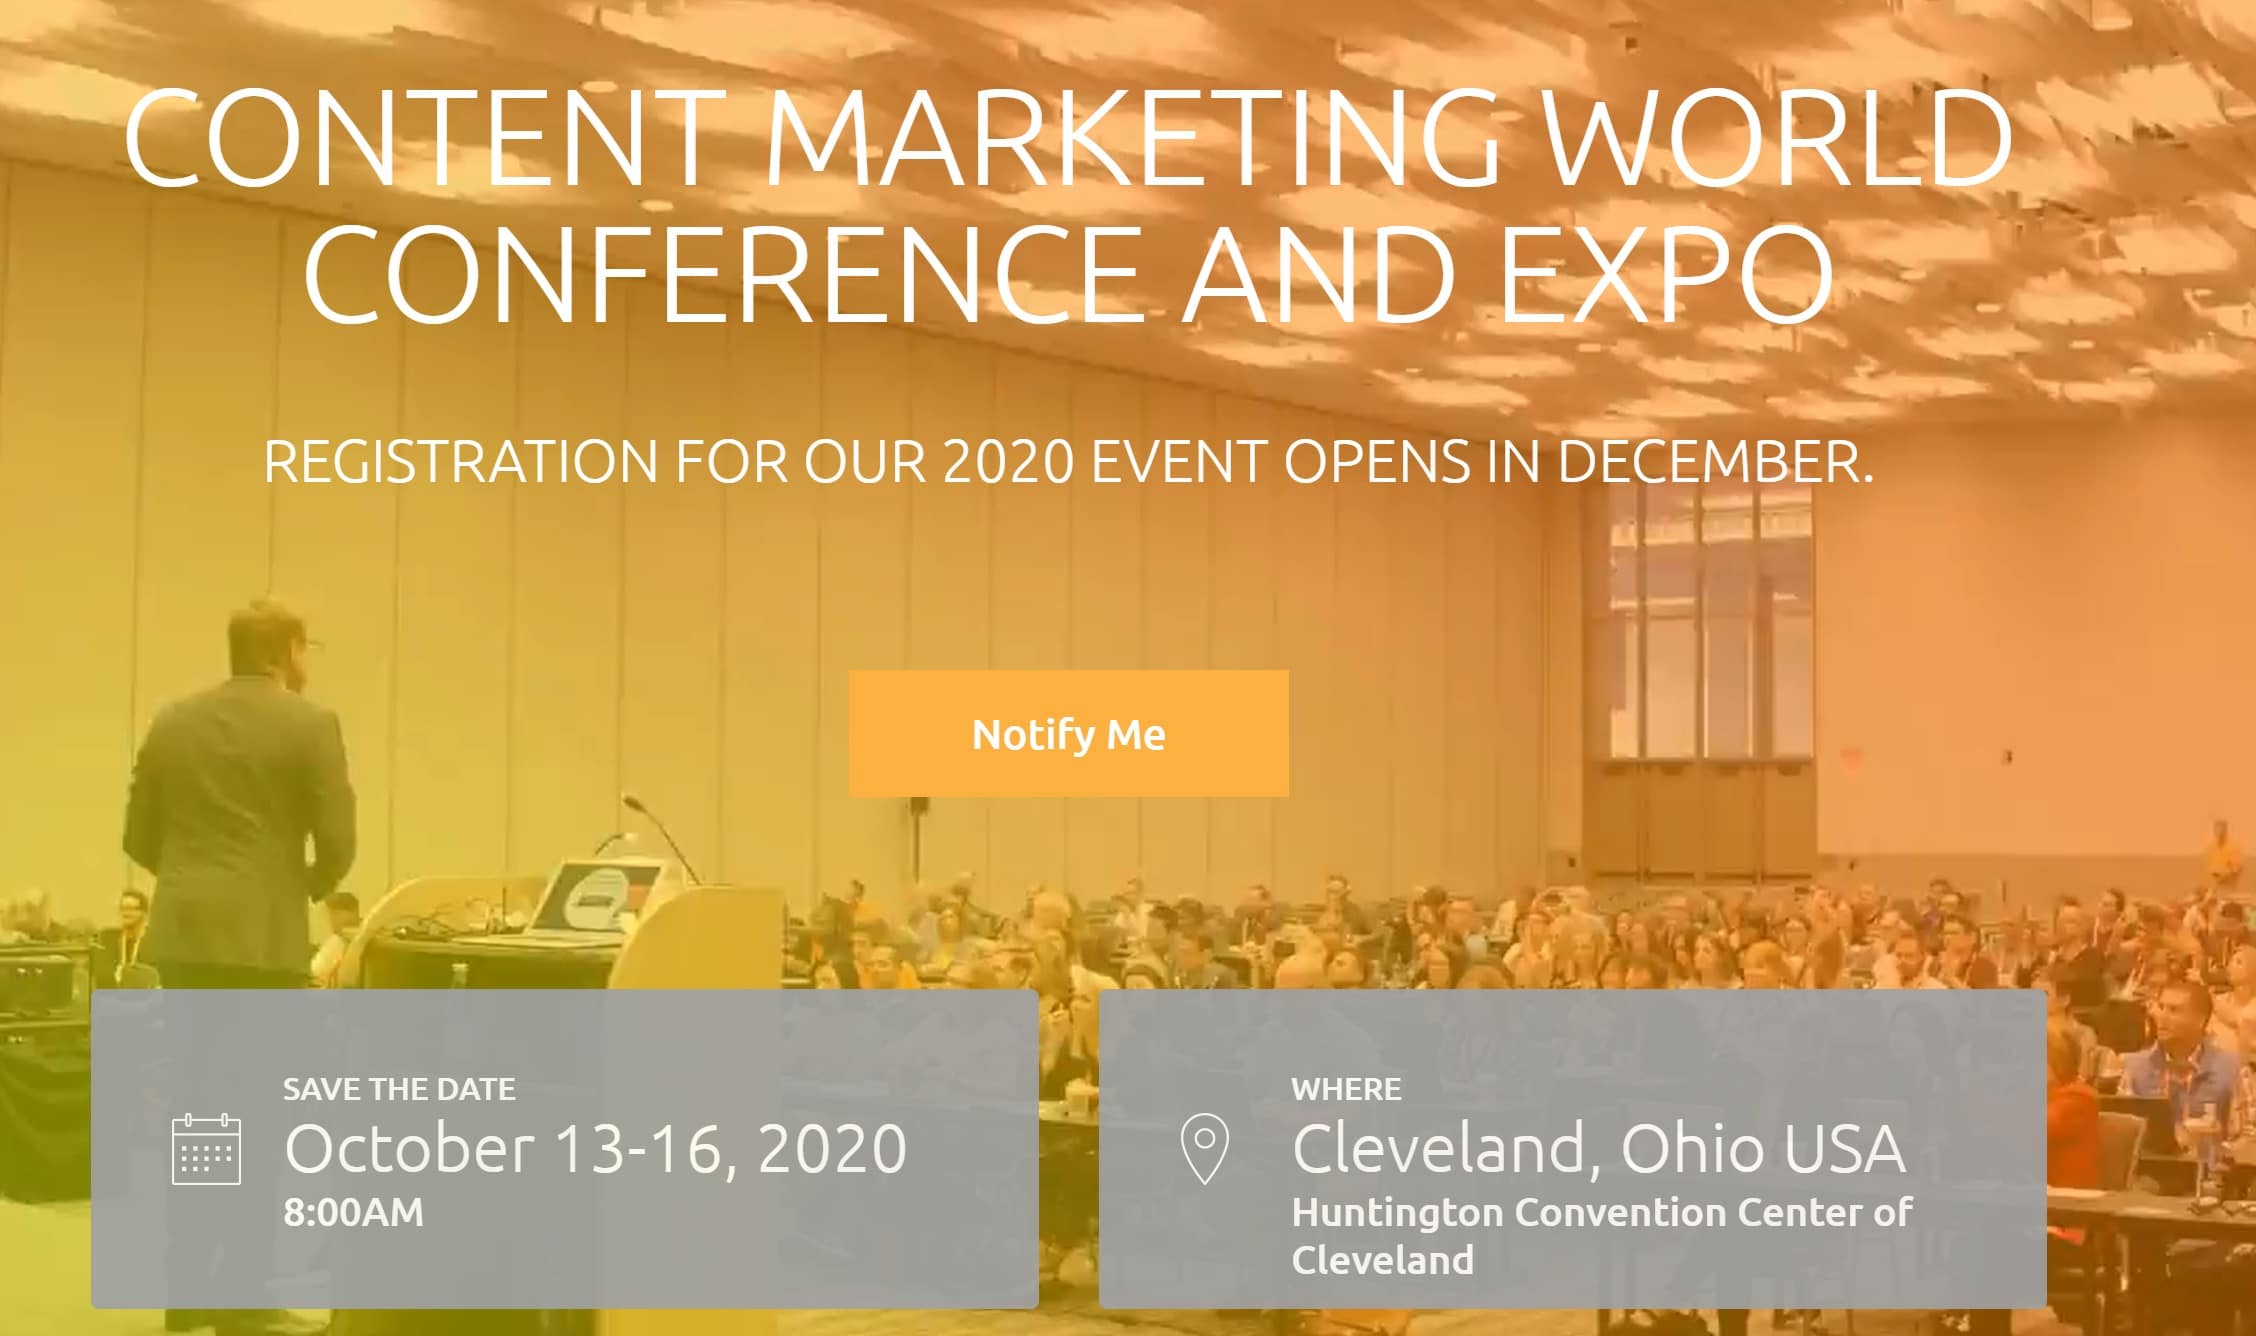  Content Marketing World event information